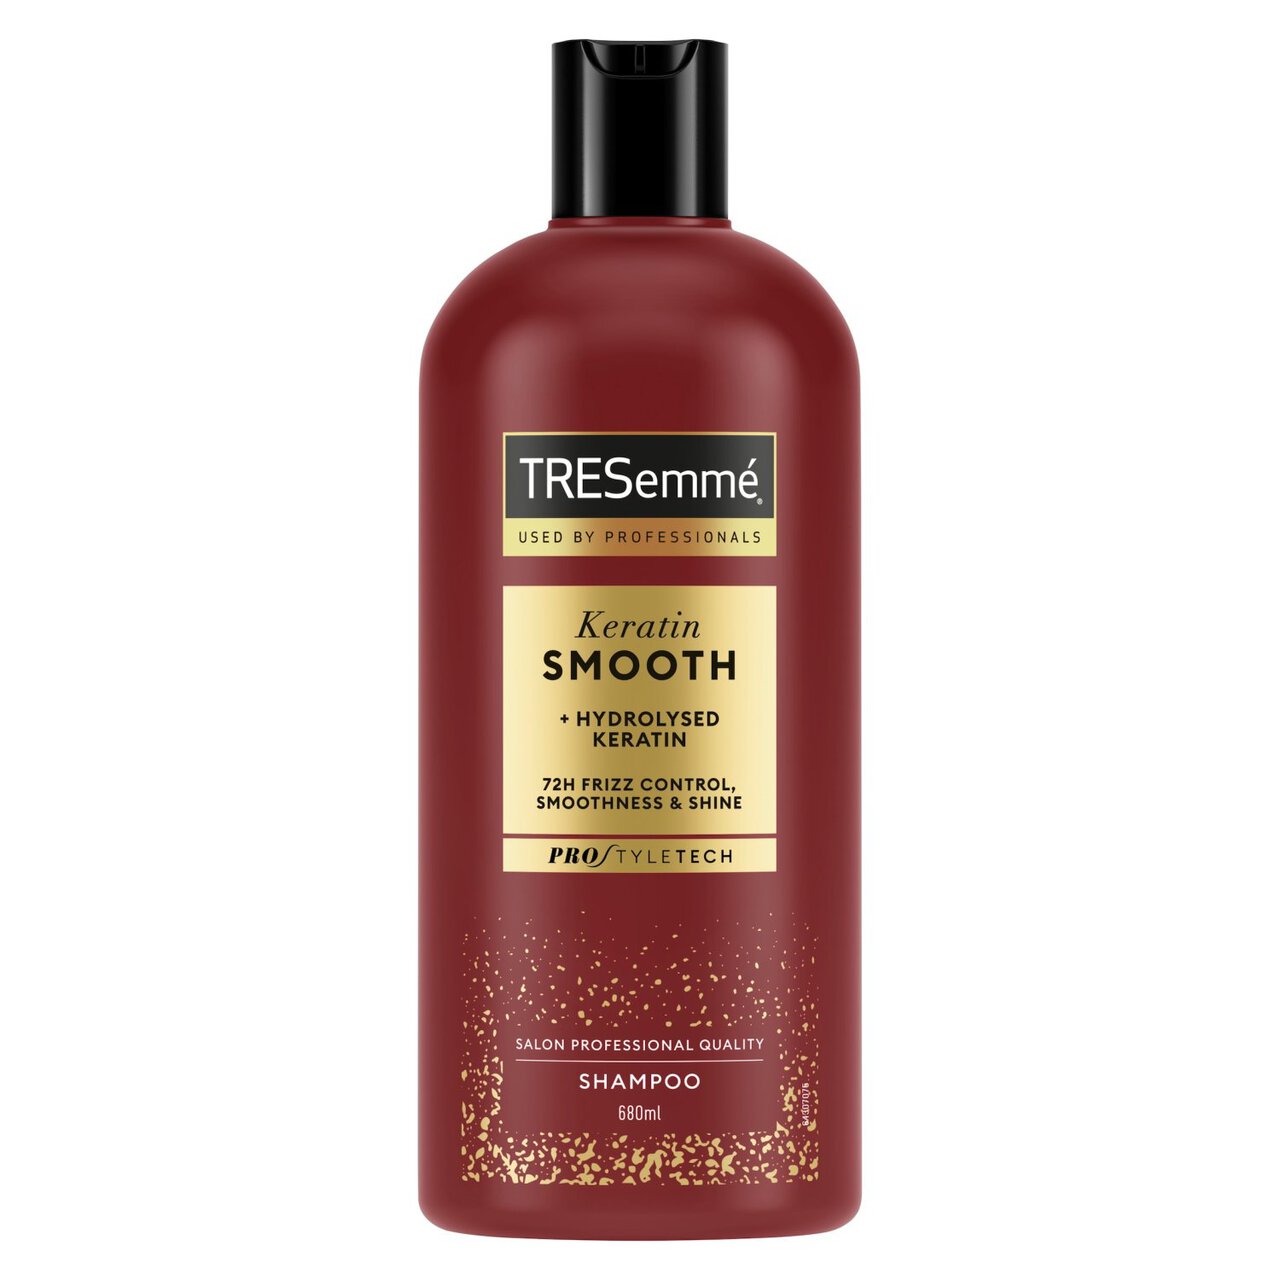 TRESemme KERATIN SMOOTH Shampoo 680ml